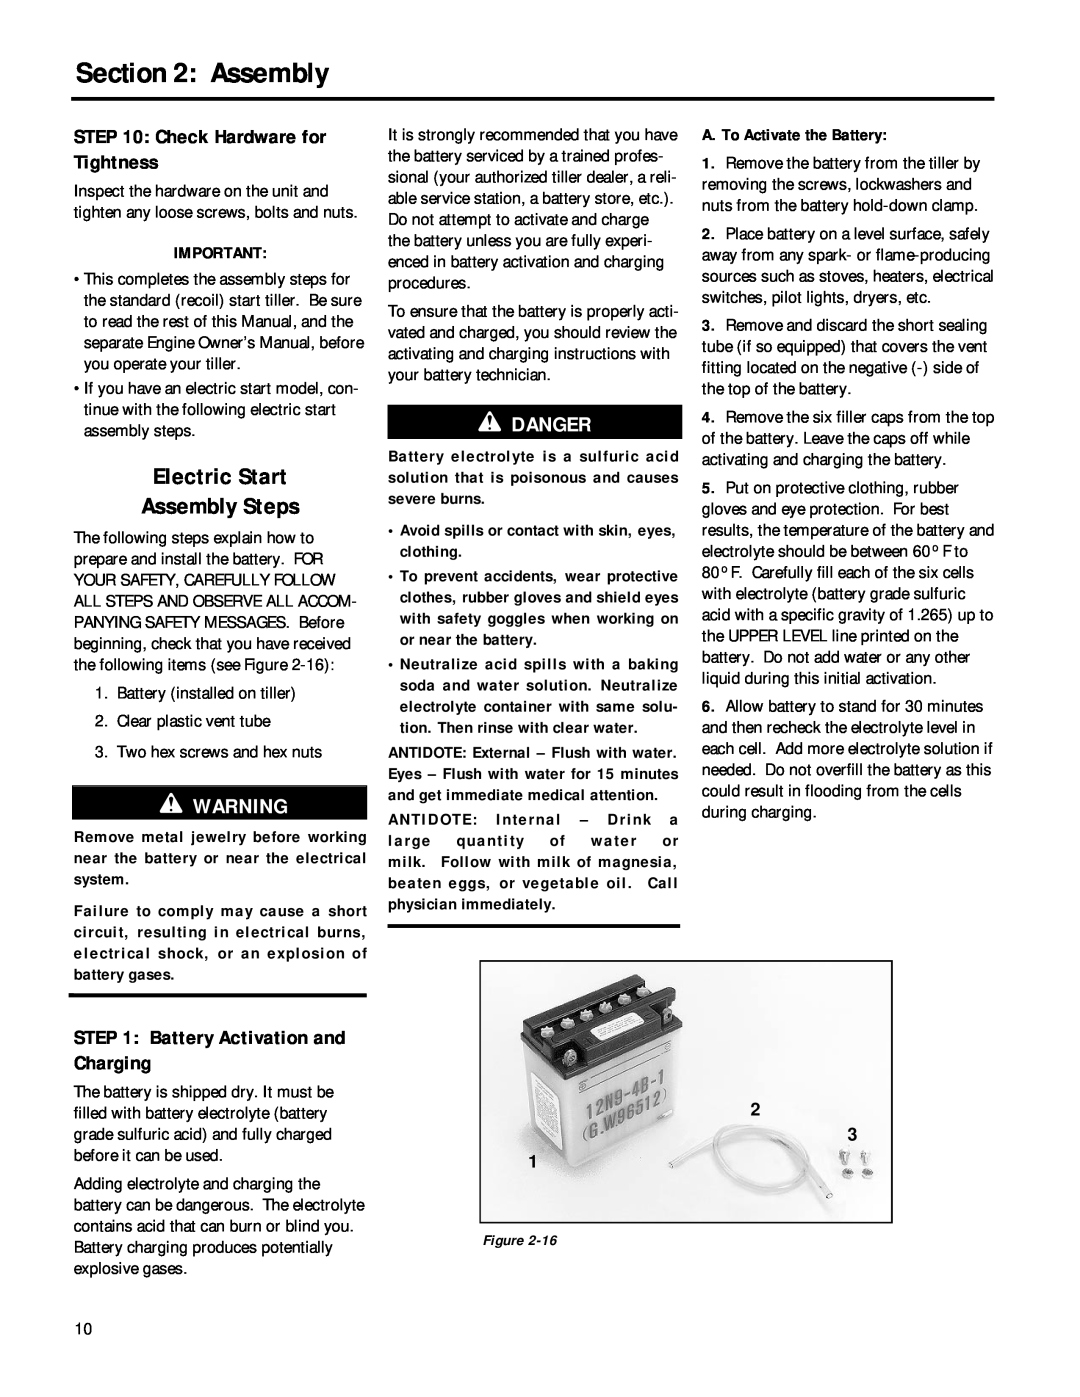 Troy-Bilt 12212 Electric Start Assembly Steps, Danger, Check Hardware for Tightness, Battery Activation and Charging 